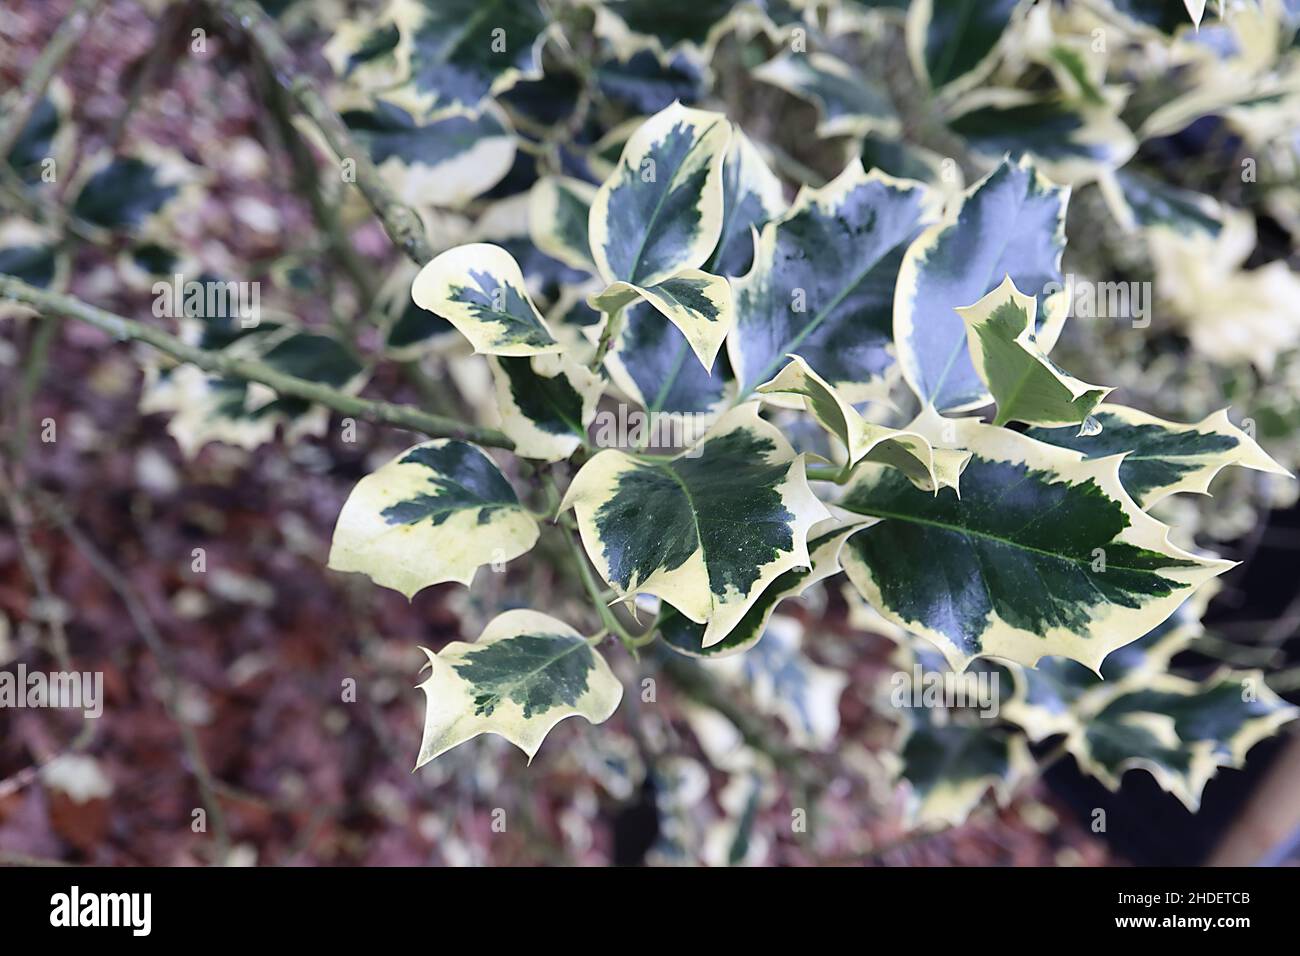 Ilex aquifolium “Reina de Oro” Reina de oro acebo - hojas verdes oscuras, midrib verde pálido y márgenes de crema espesa, enero, Inglaterra, Reino Unido Foto de stock